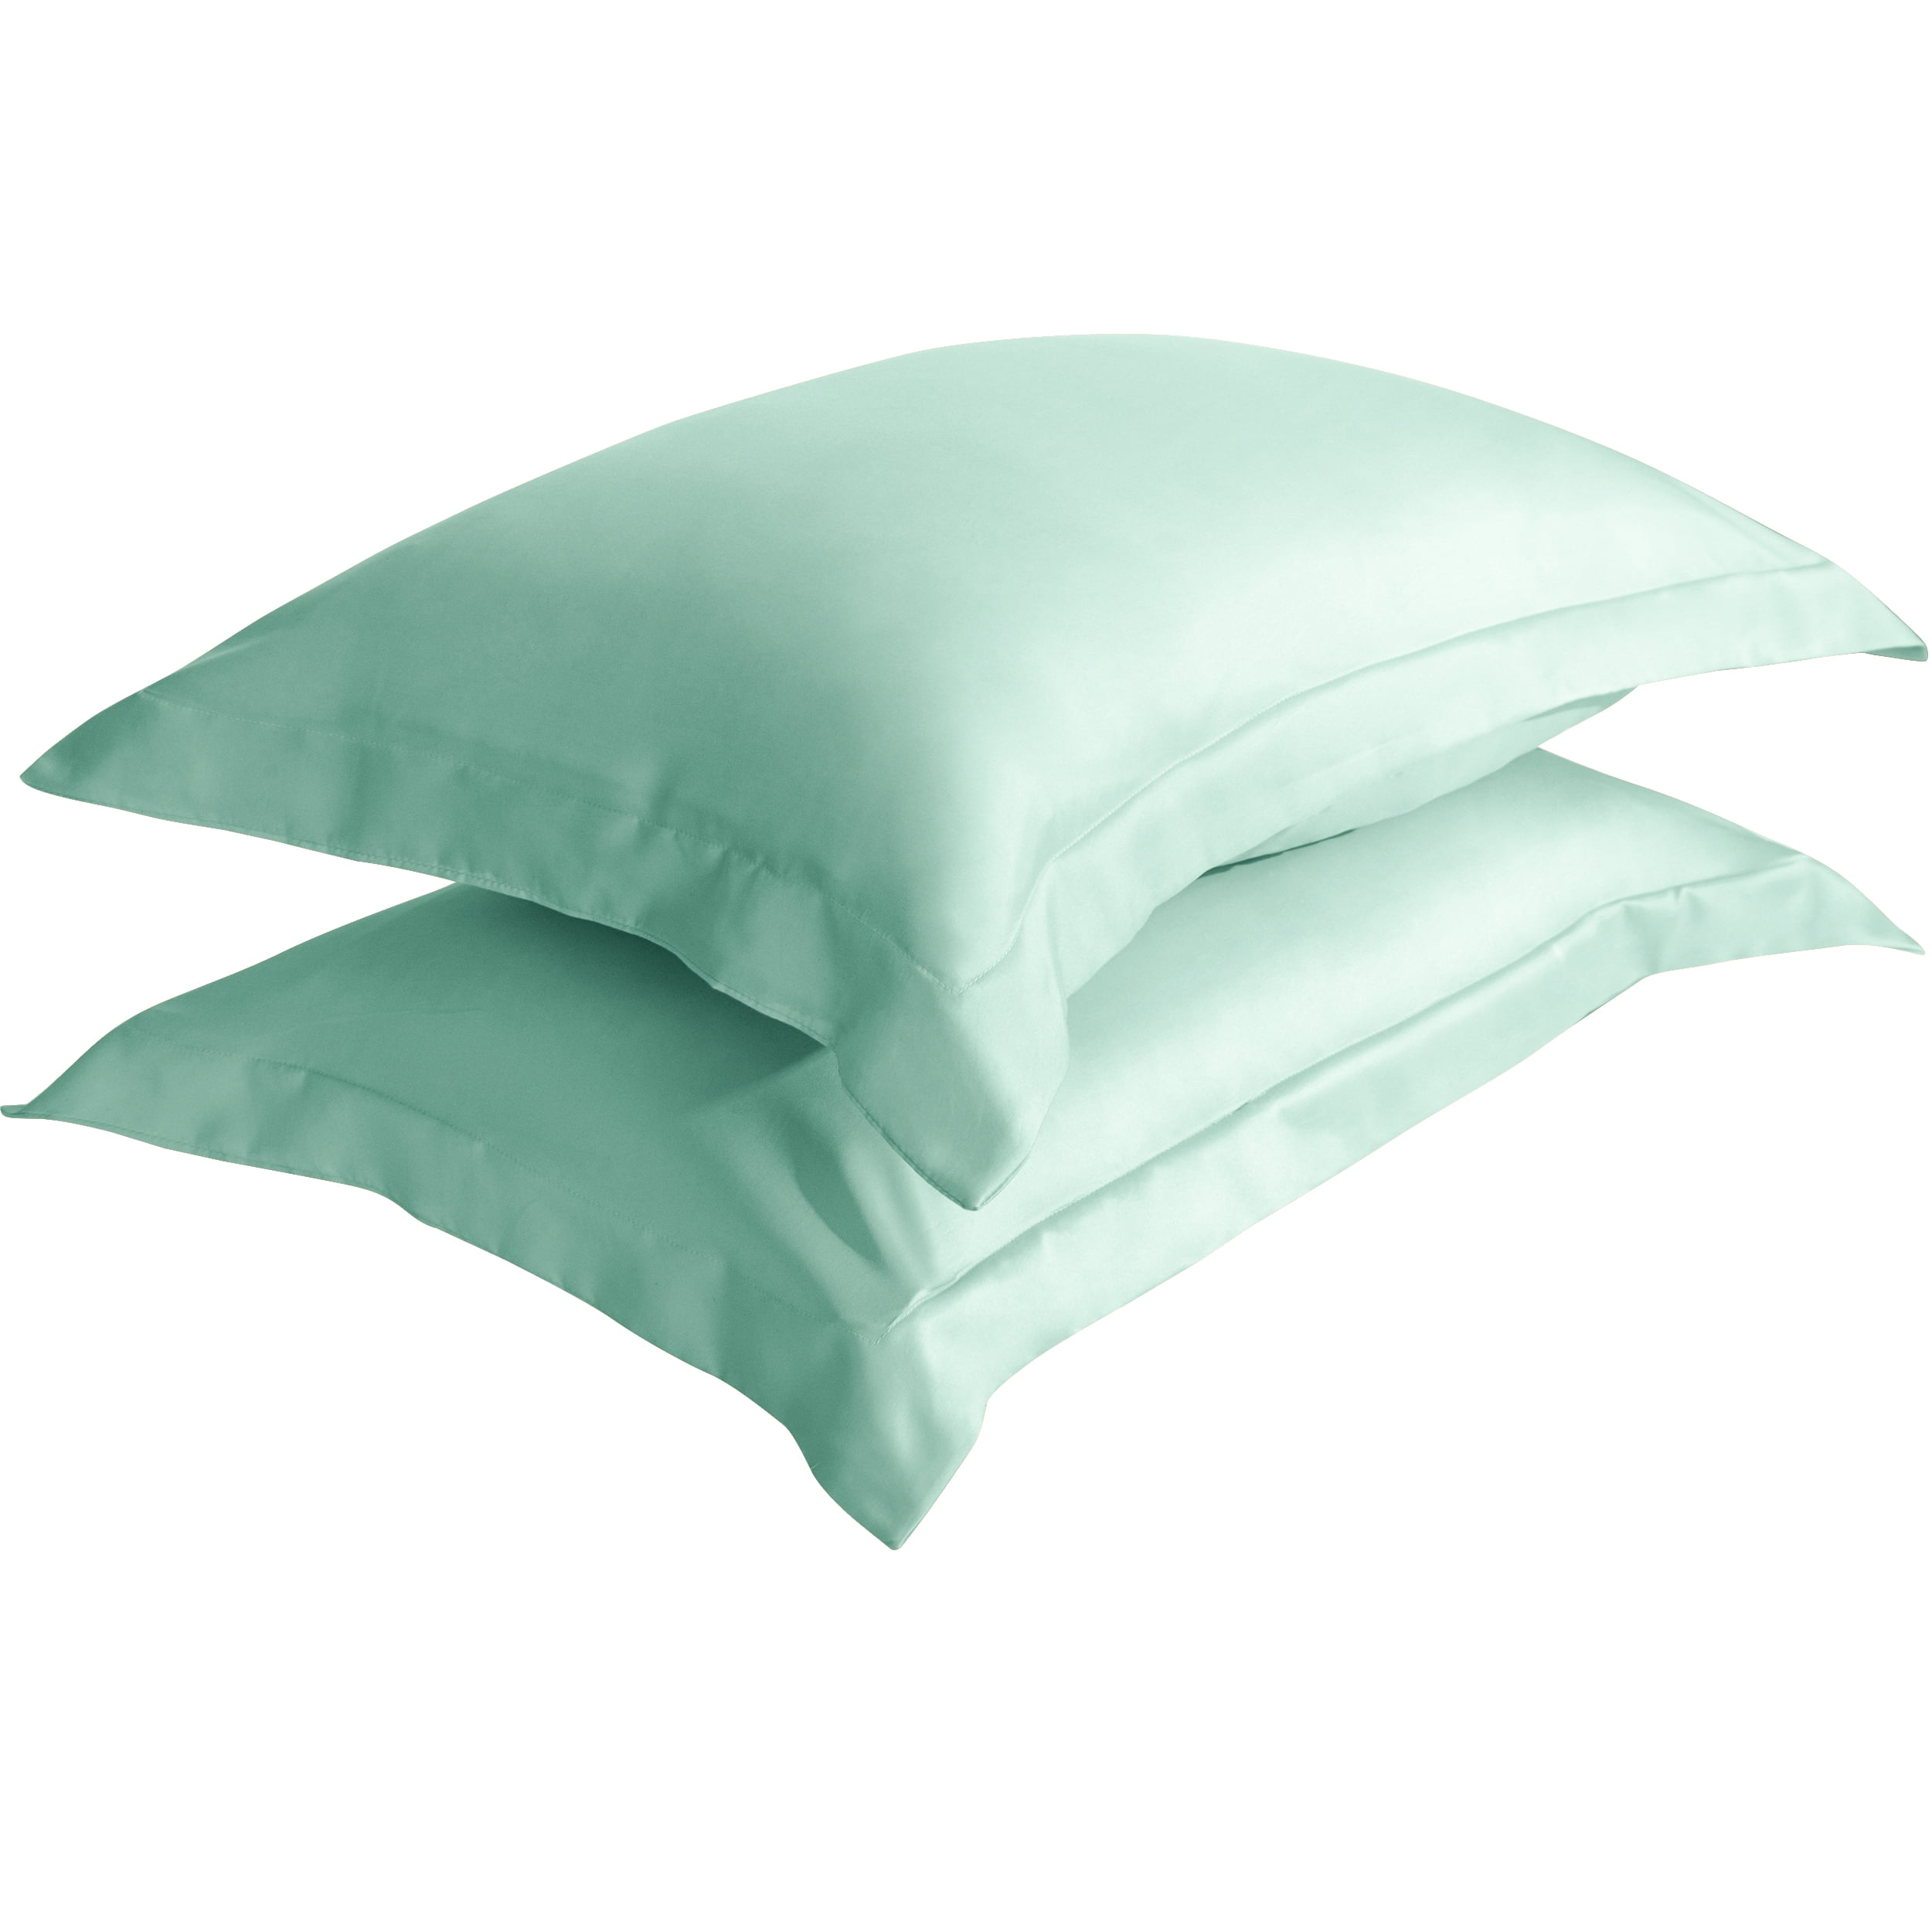 Cotton Metrics Heavy Quality Standard Pillow Shams Set of 2 White 600TC 100% Organic Cotton White Pillow Shams Standard Size 20X26 Decorative Pillow Cover with 2 Inch Flang